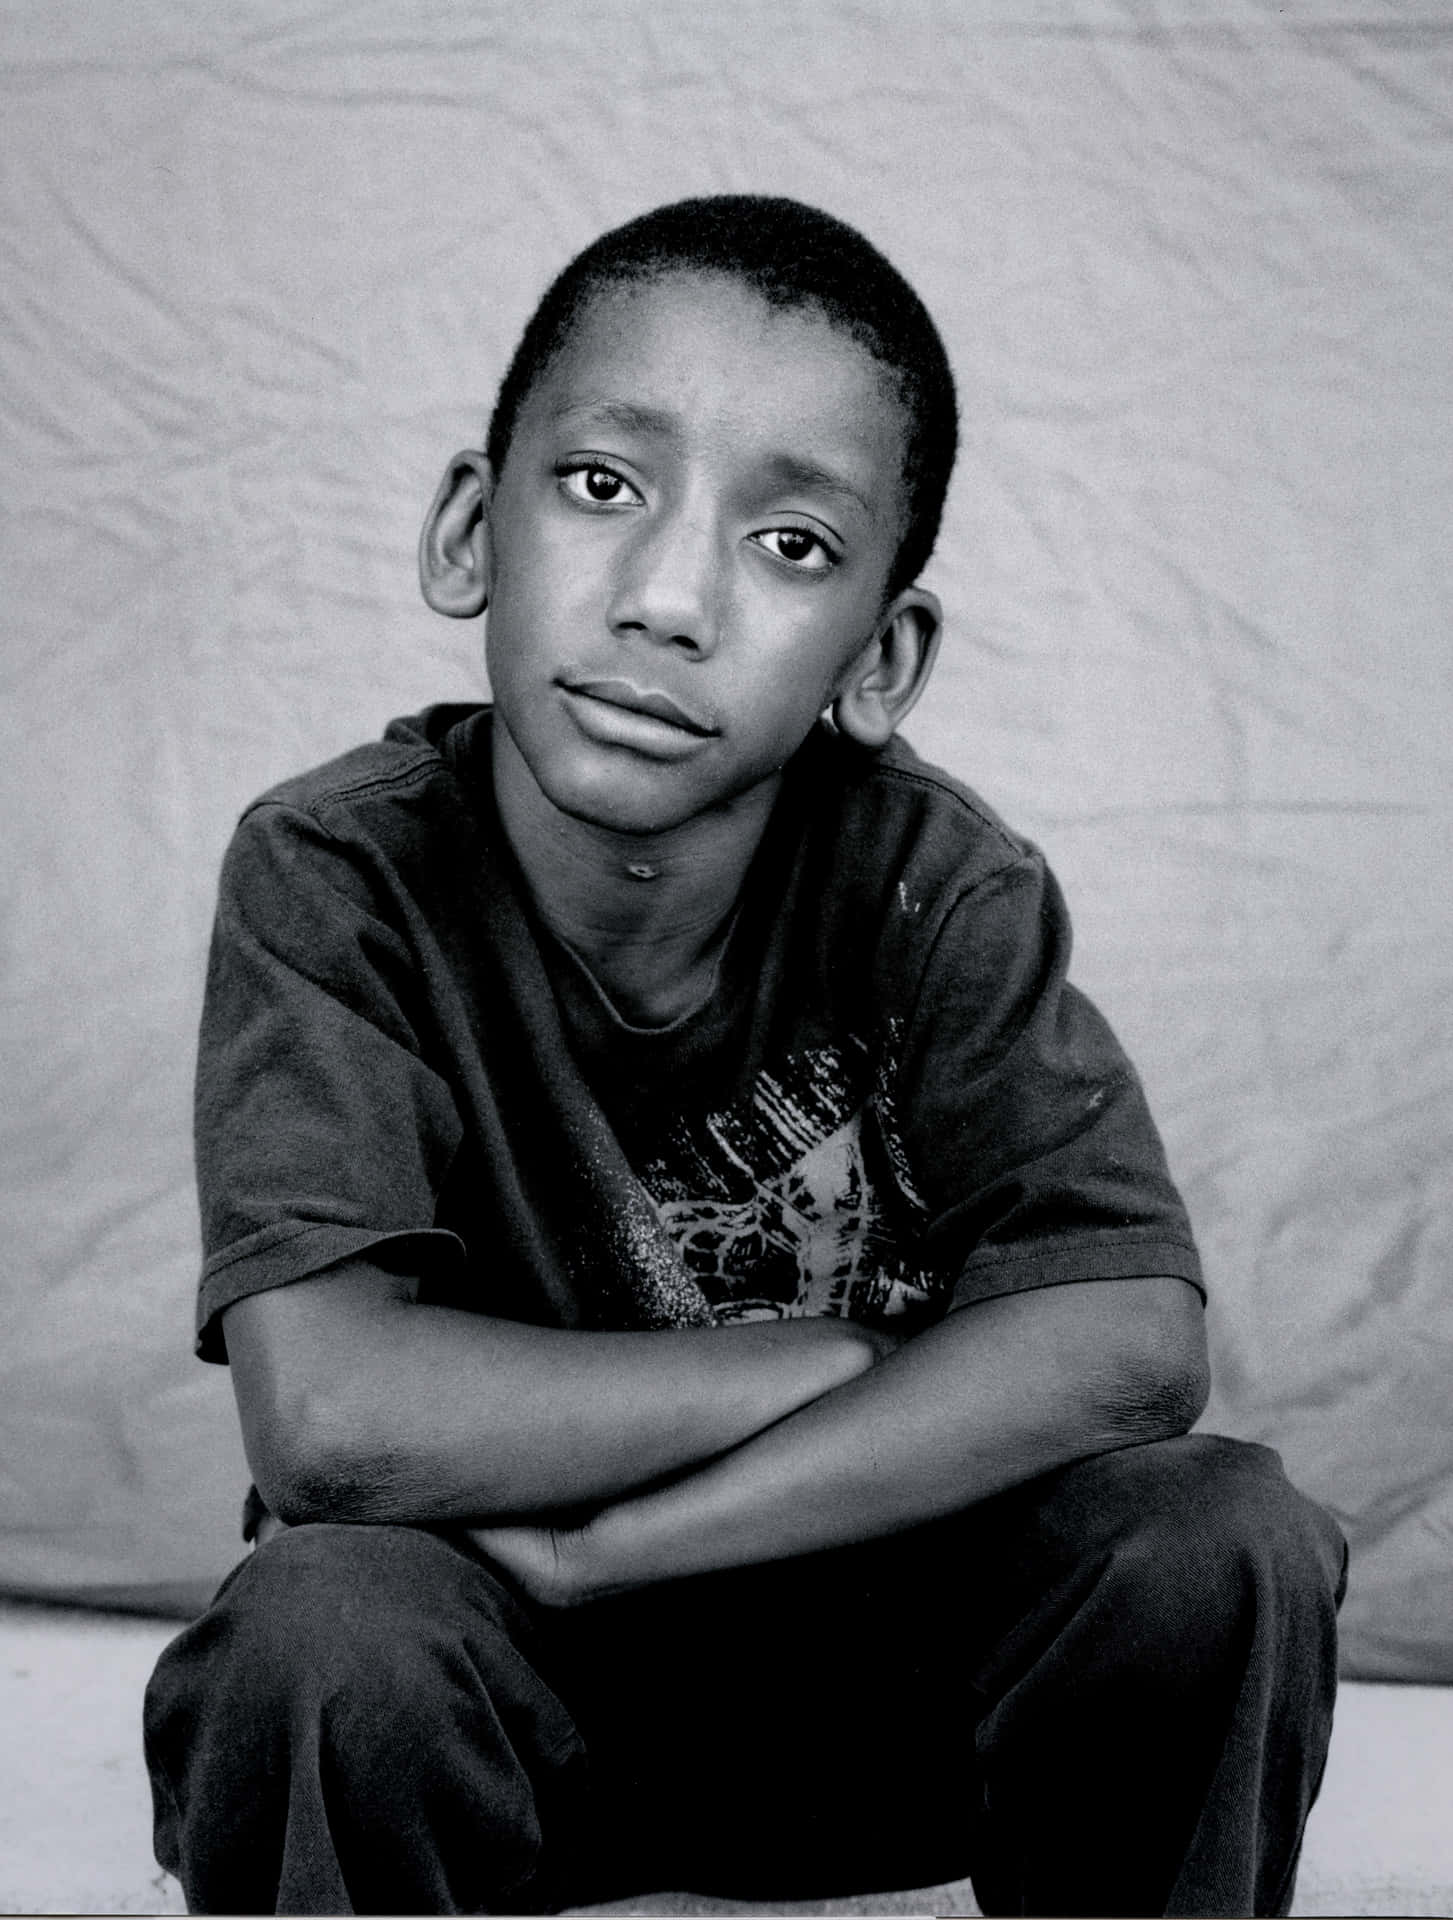 Download Poor Kid Black And White Portrait Wallpaper | Wallpapers.com